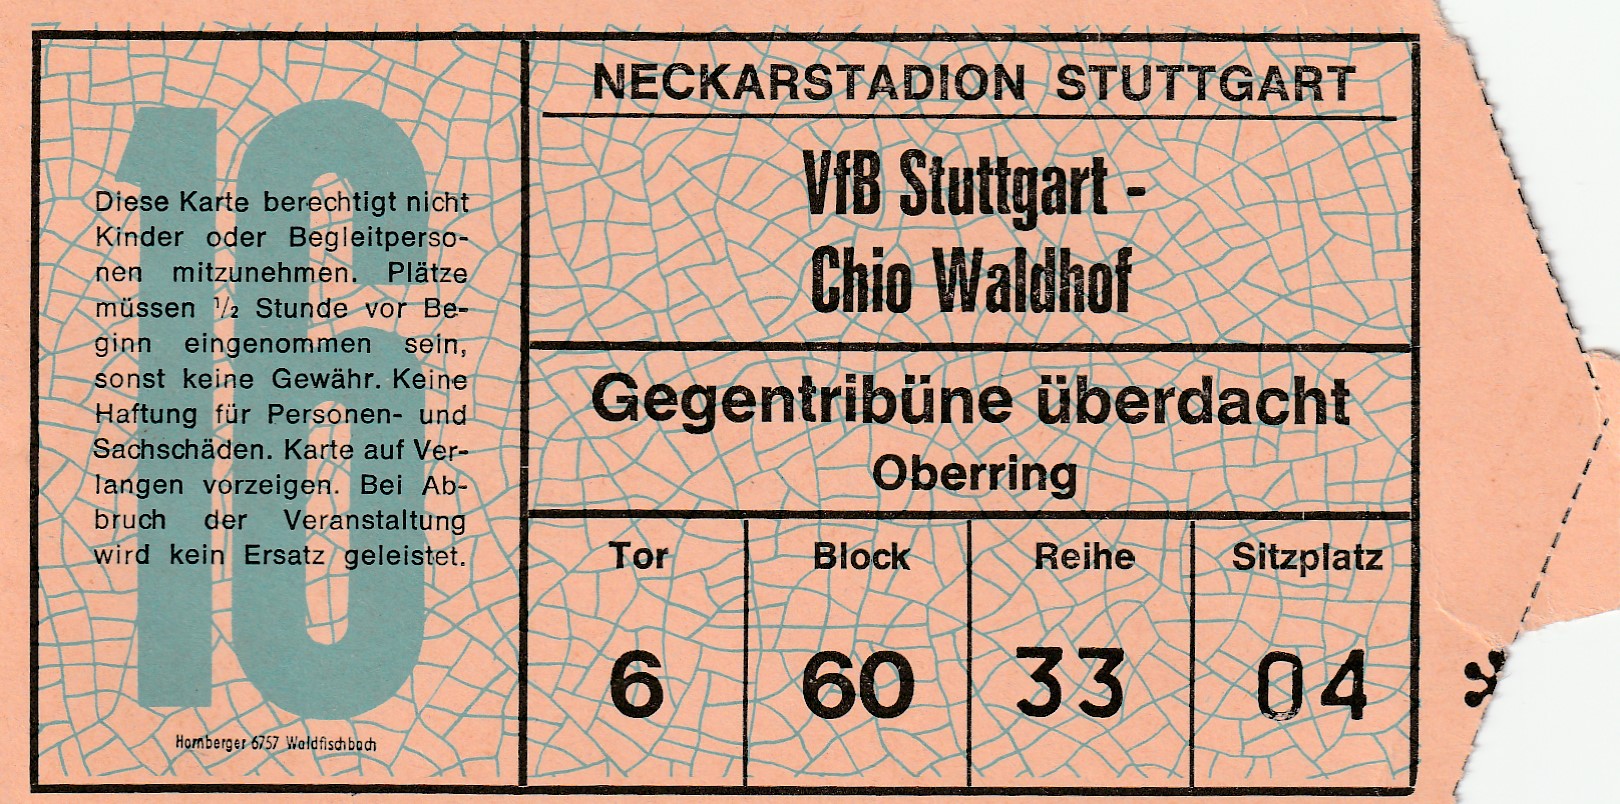 Eintrittskarte 1976-77 VfB Stuttgart SV Chio Waldhof.jpg